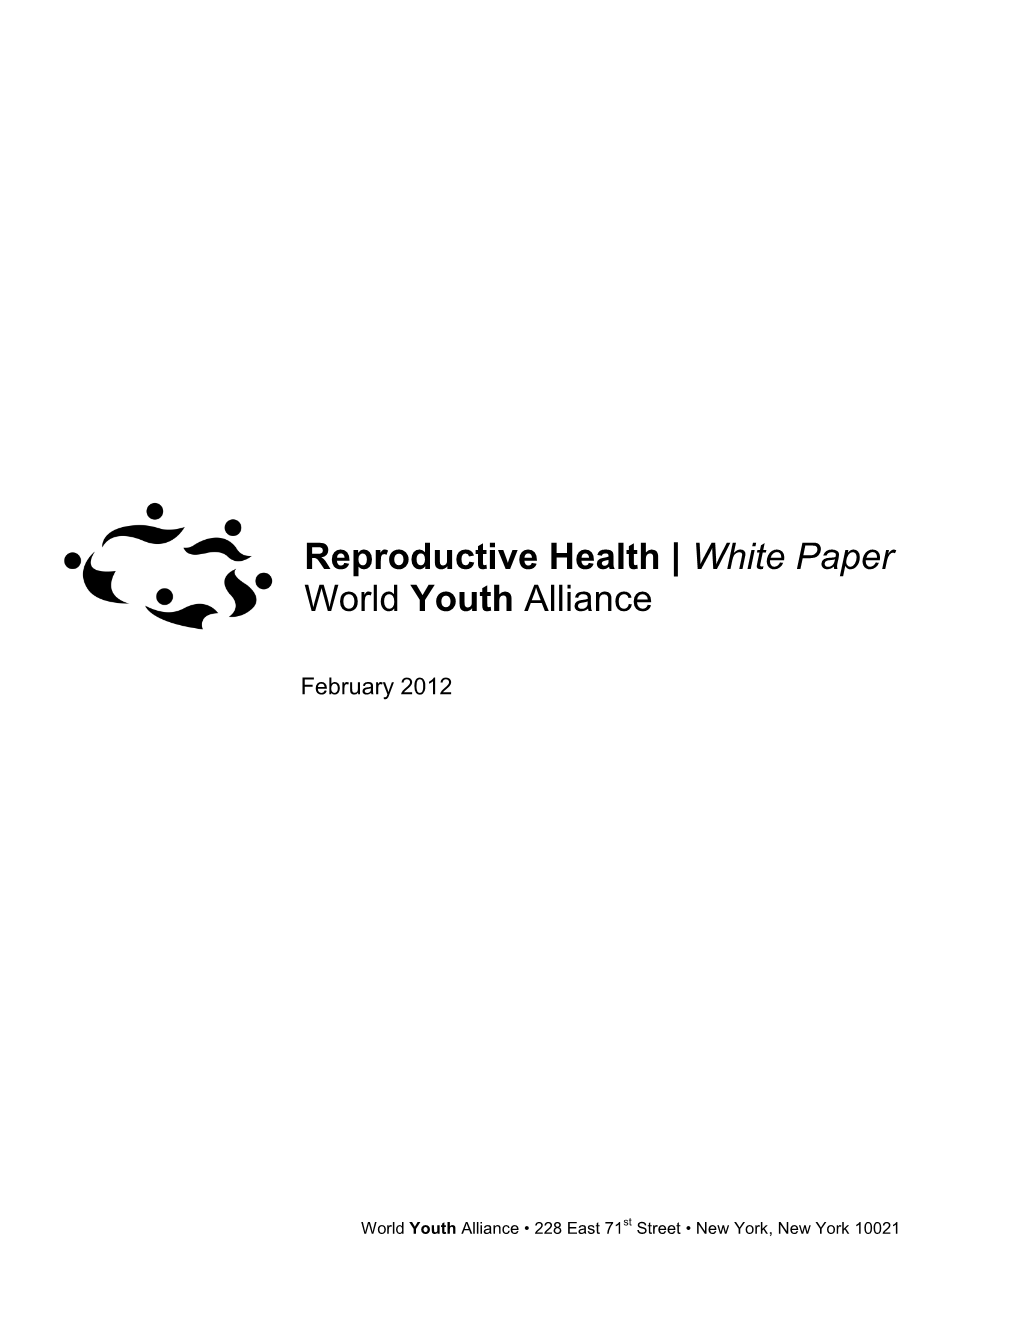 Reproductive Health White Paper